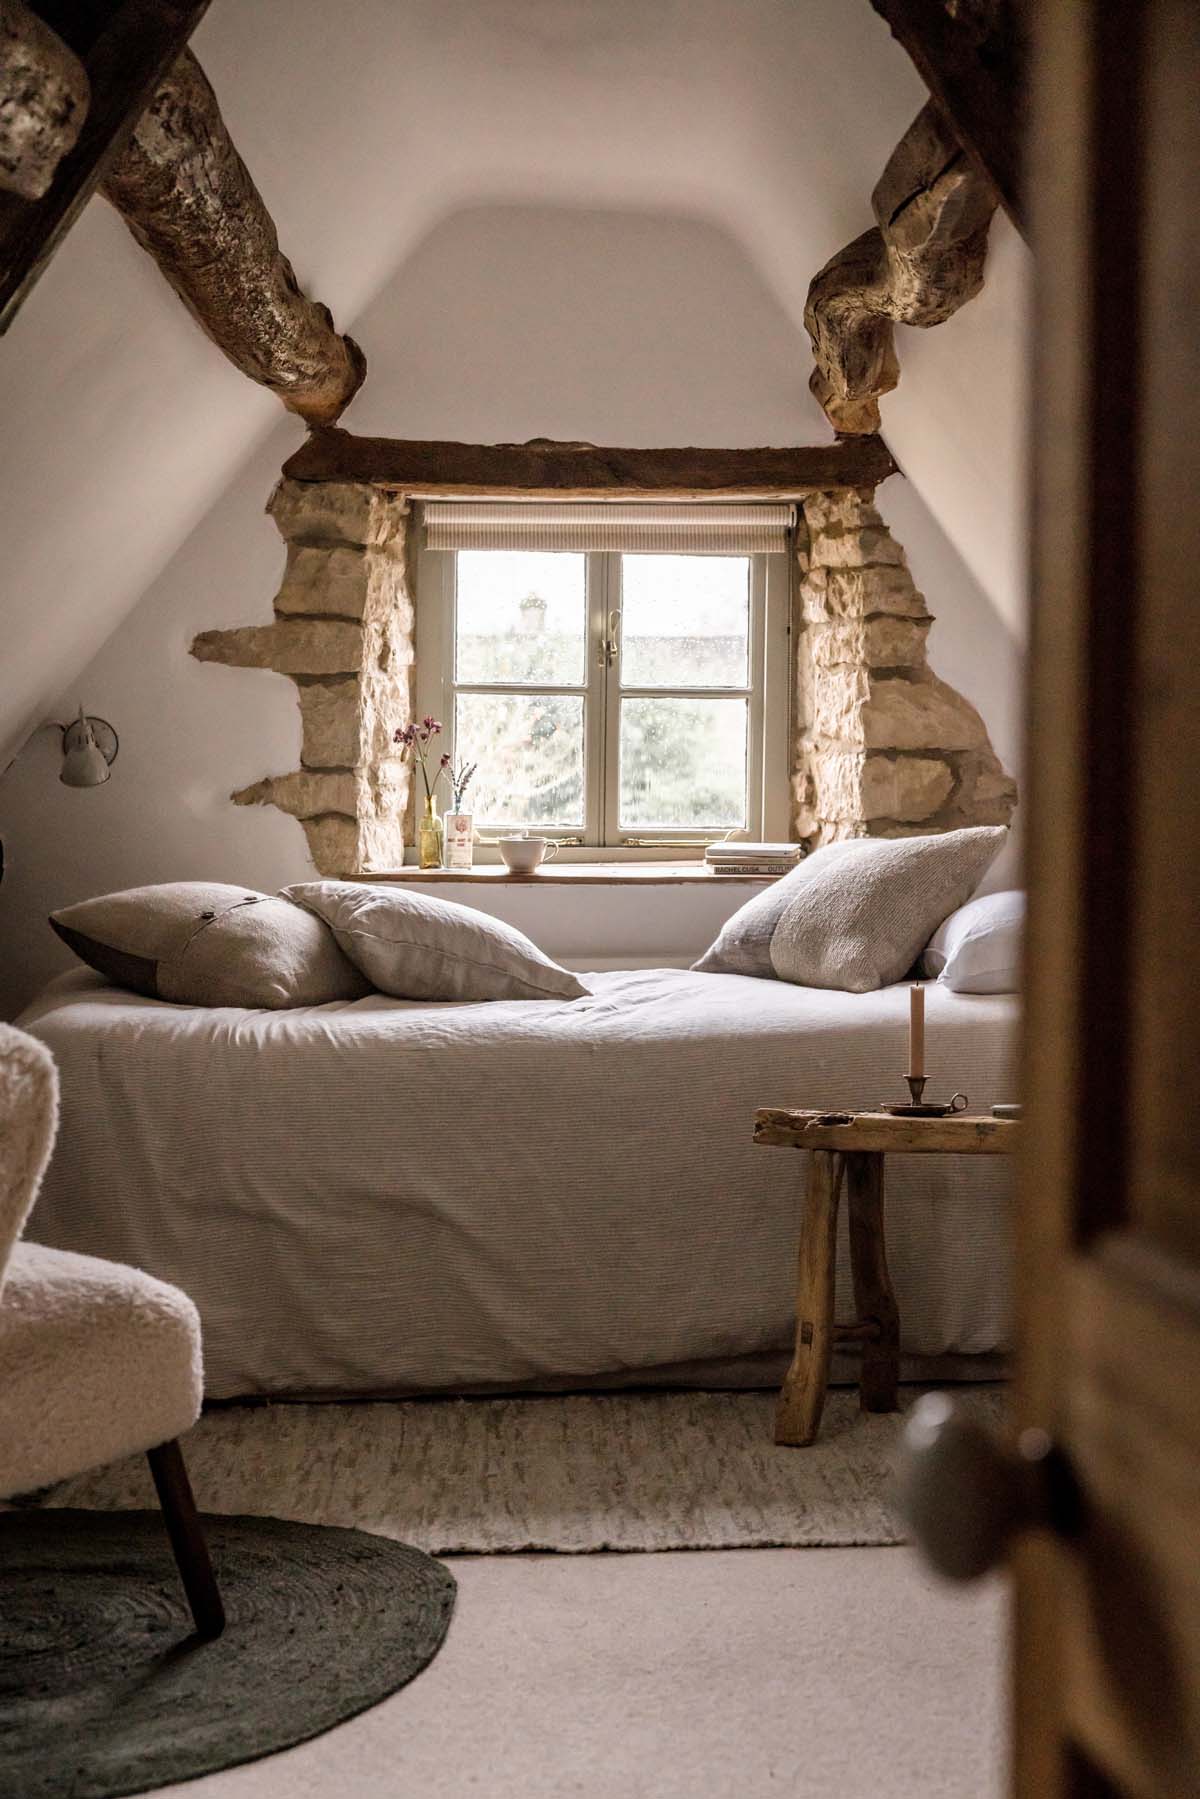 bedroom in eaves with window behind bed